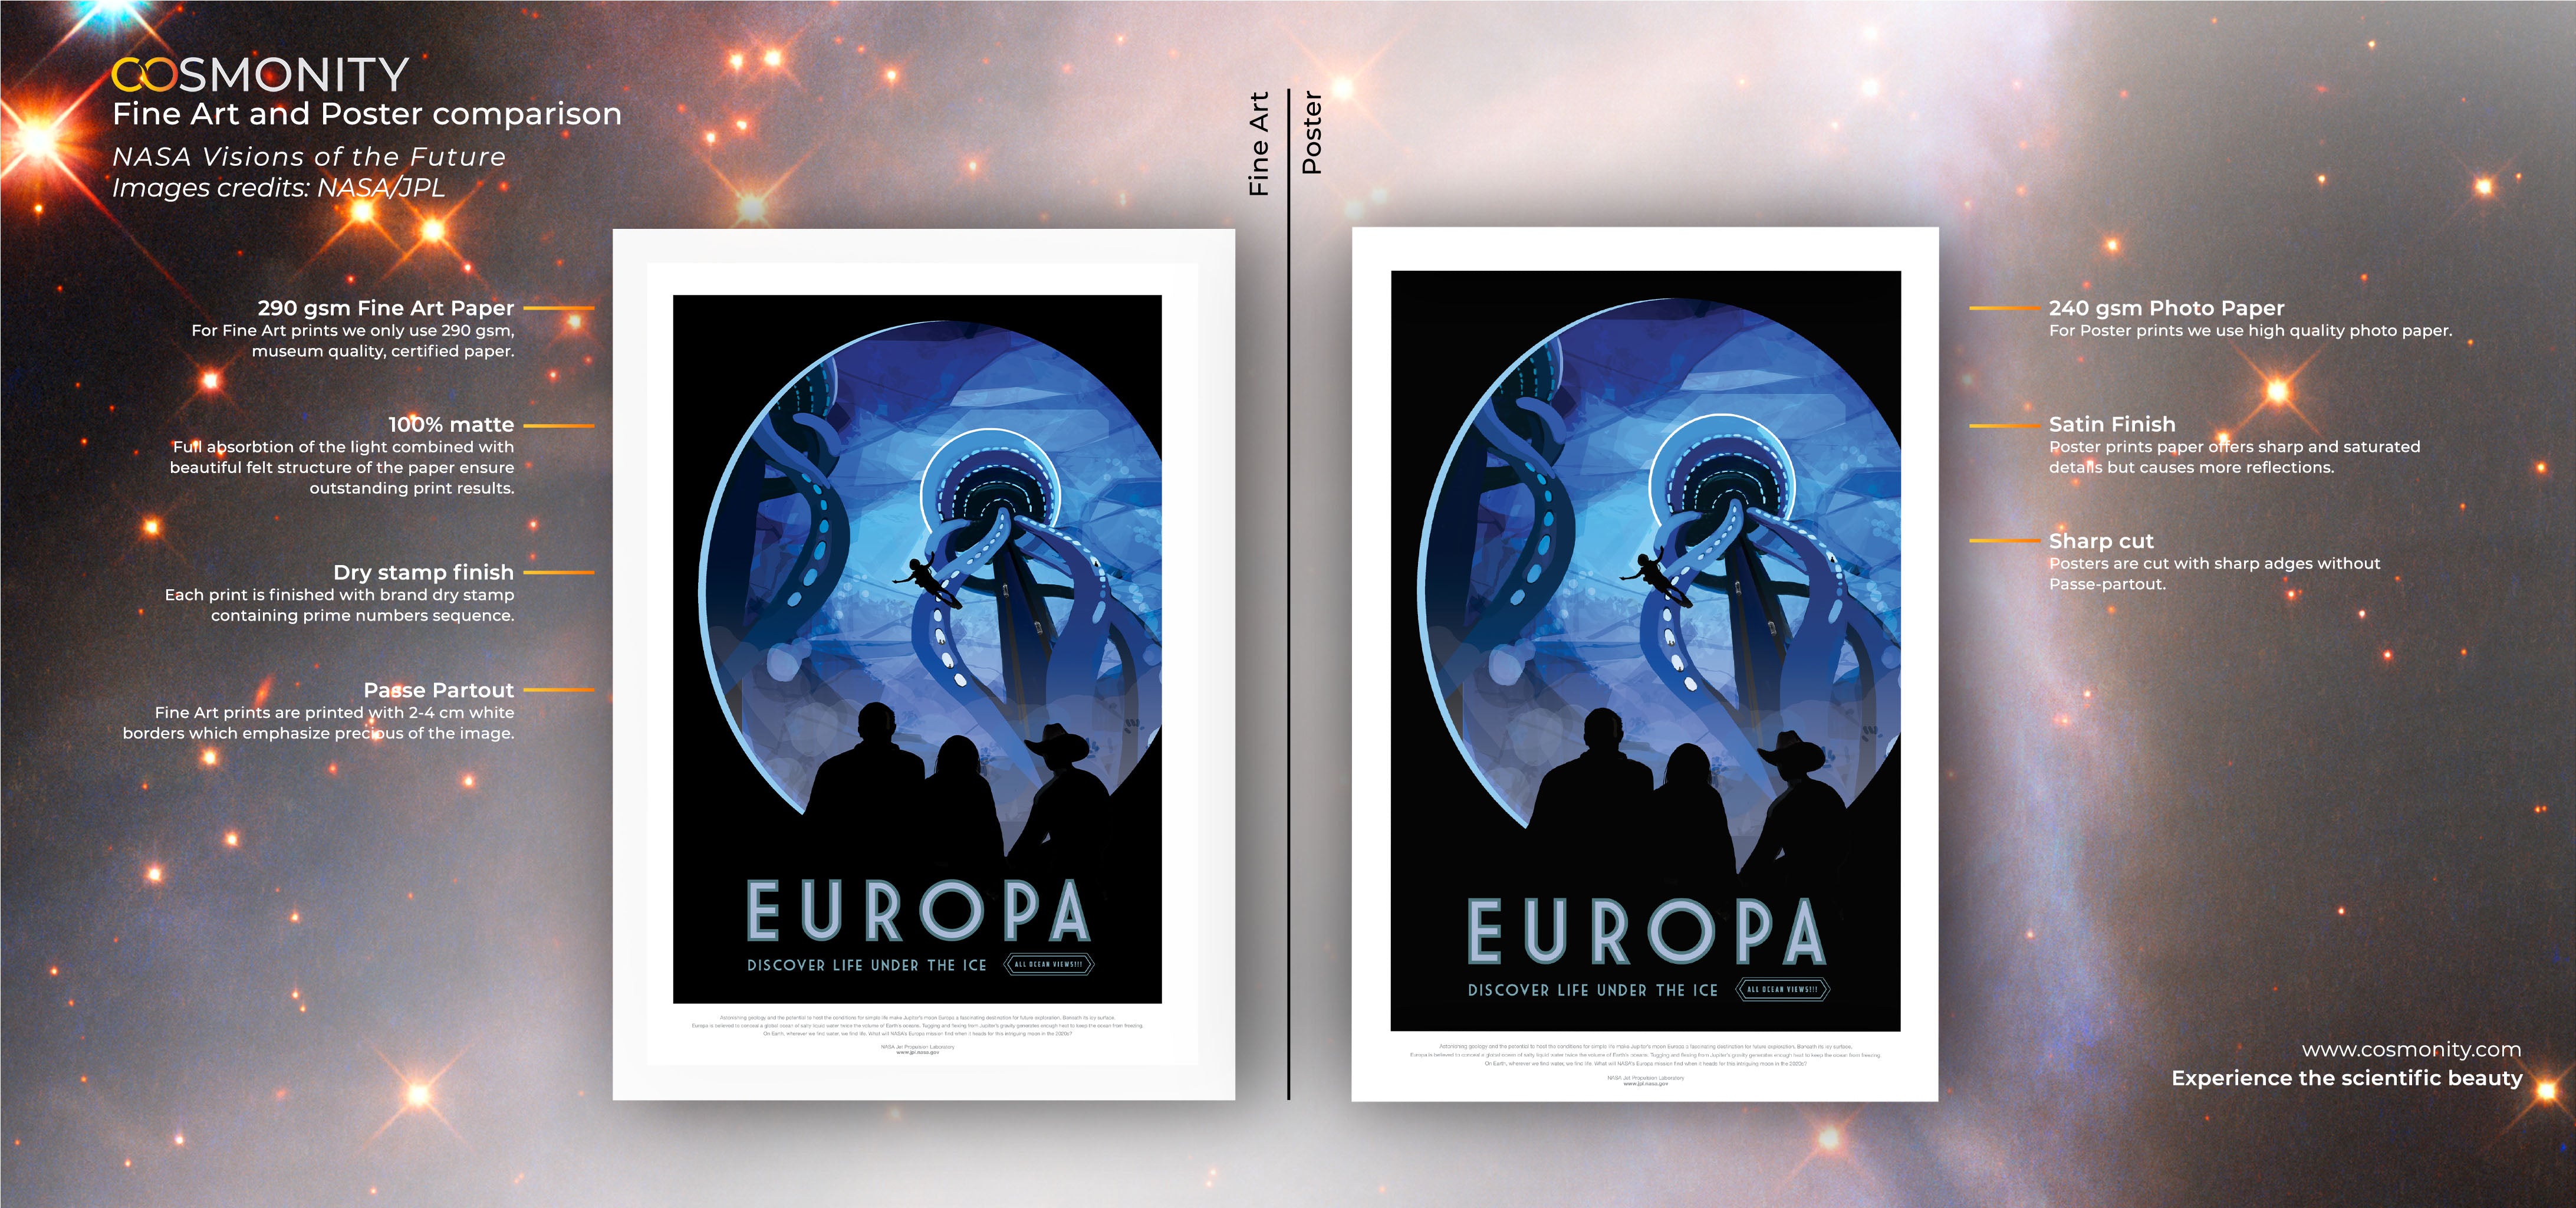 Europa - Visions of the Future NASA